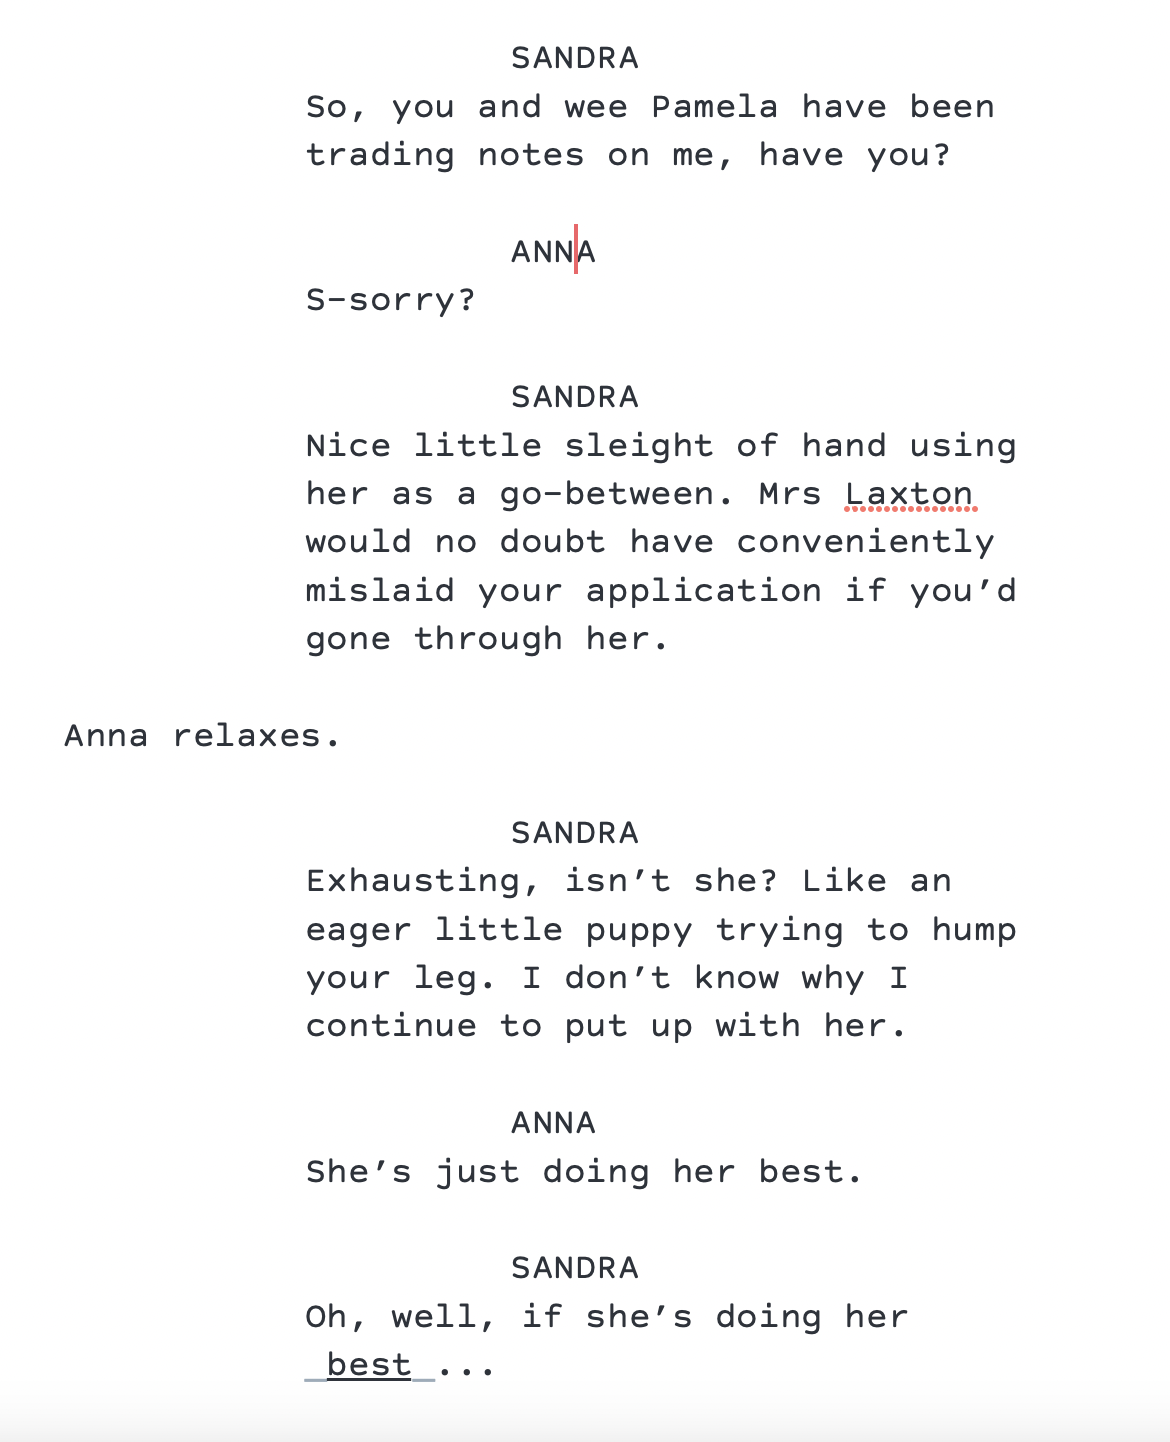 Conversation in script form